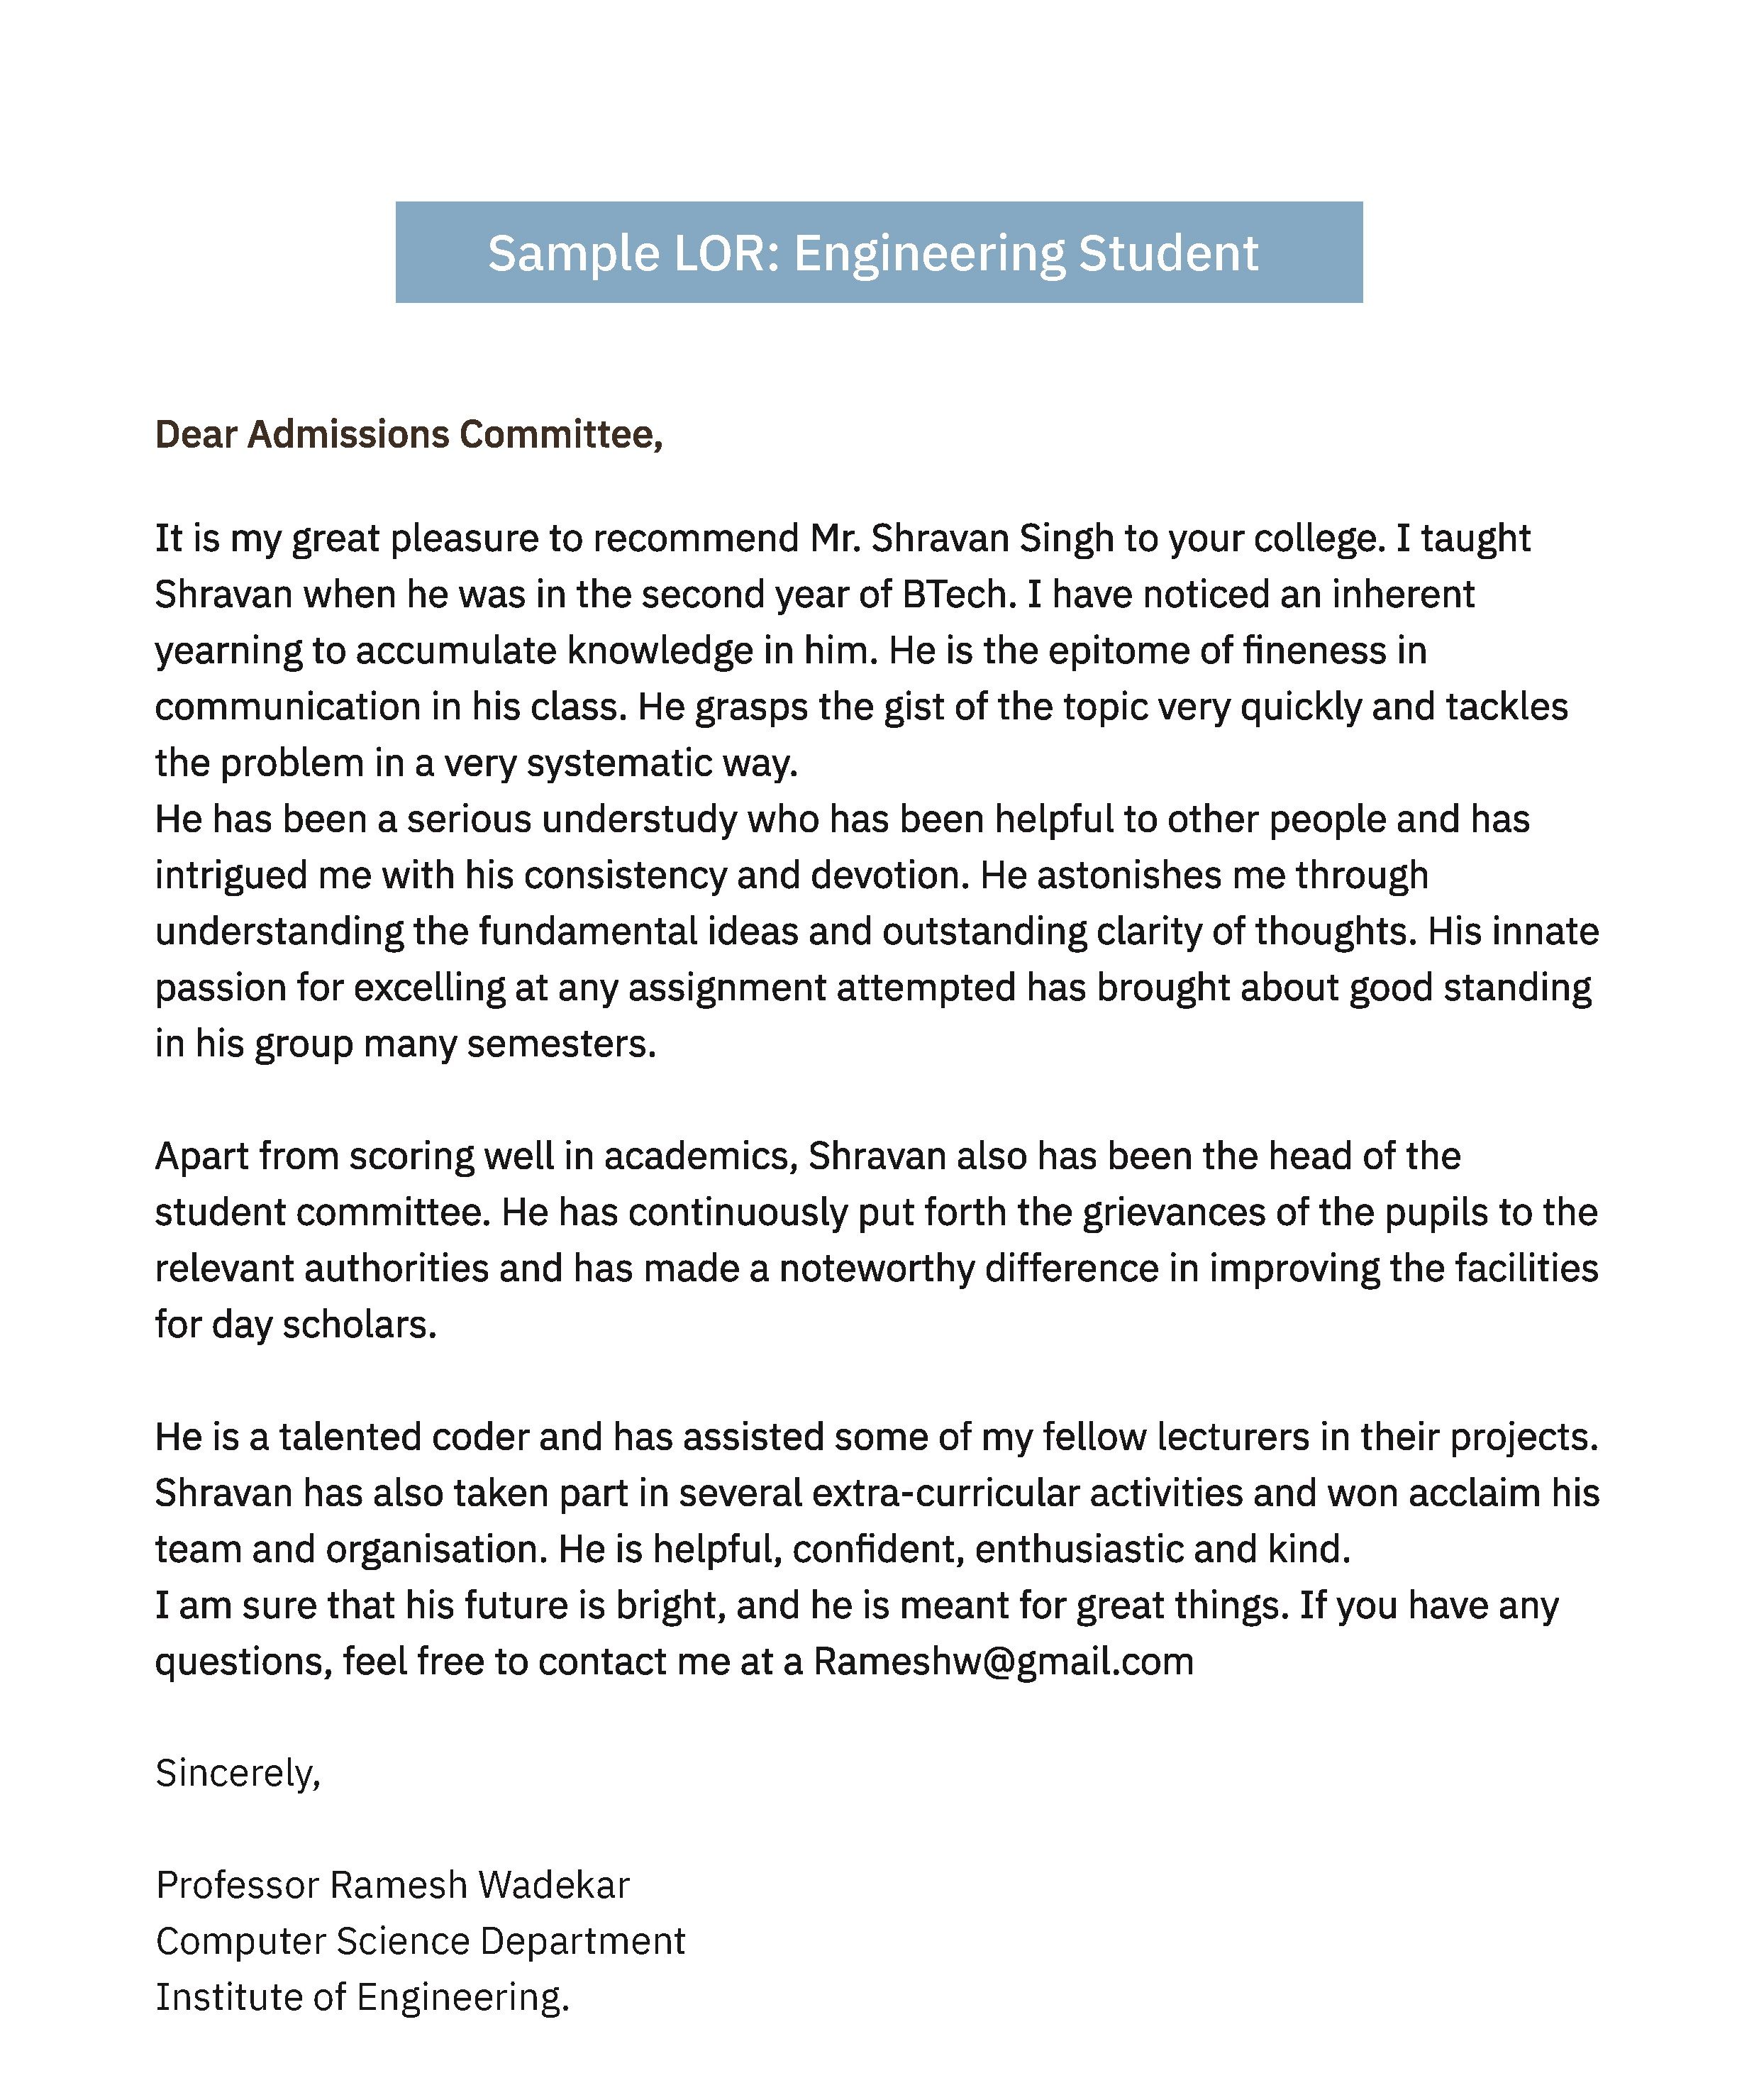 Sample LOR- Engineering Student1